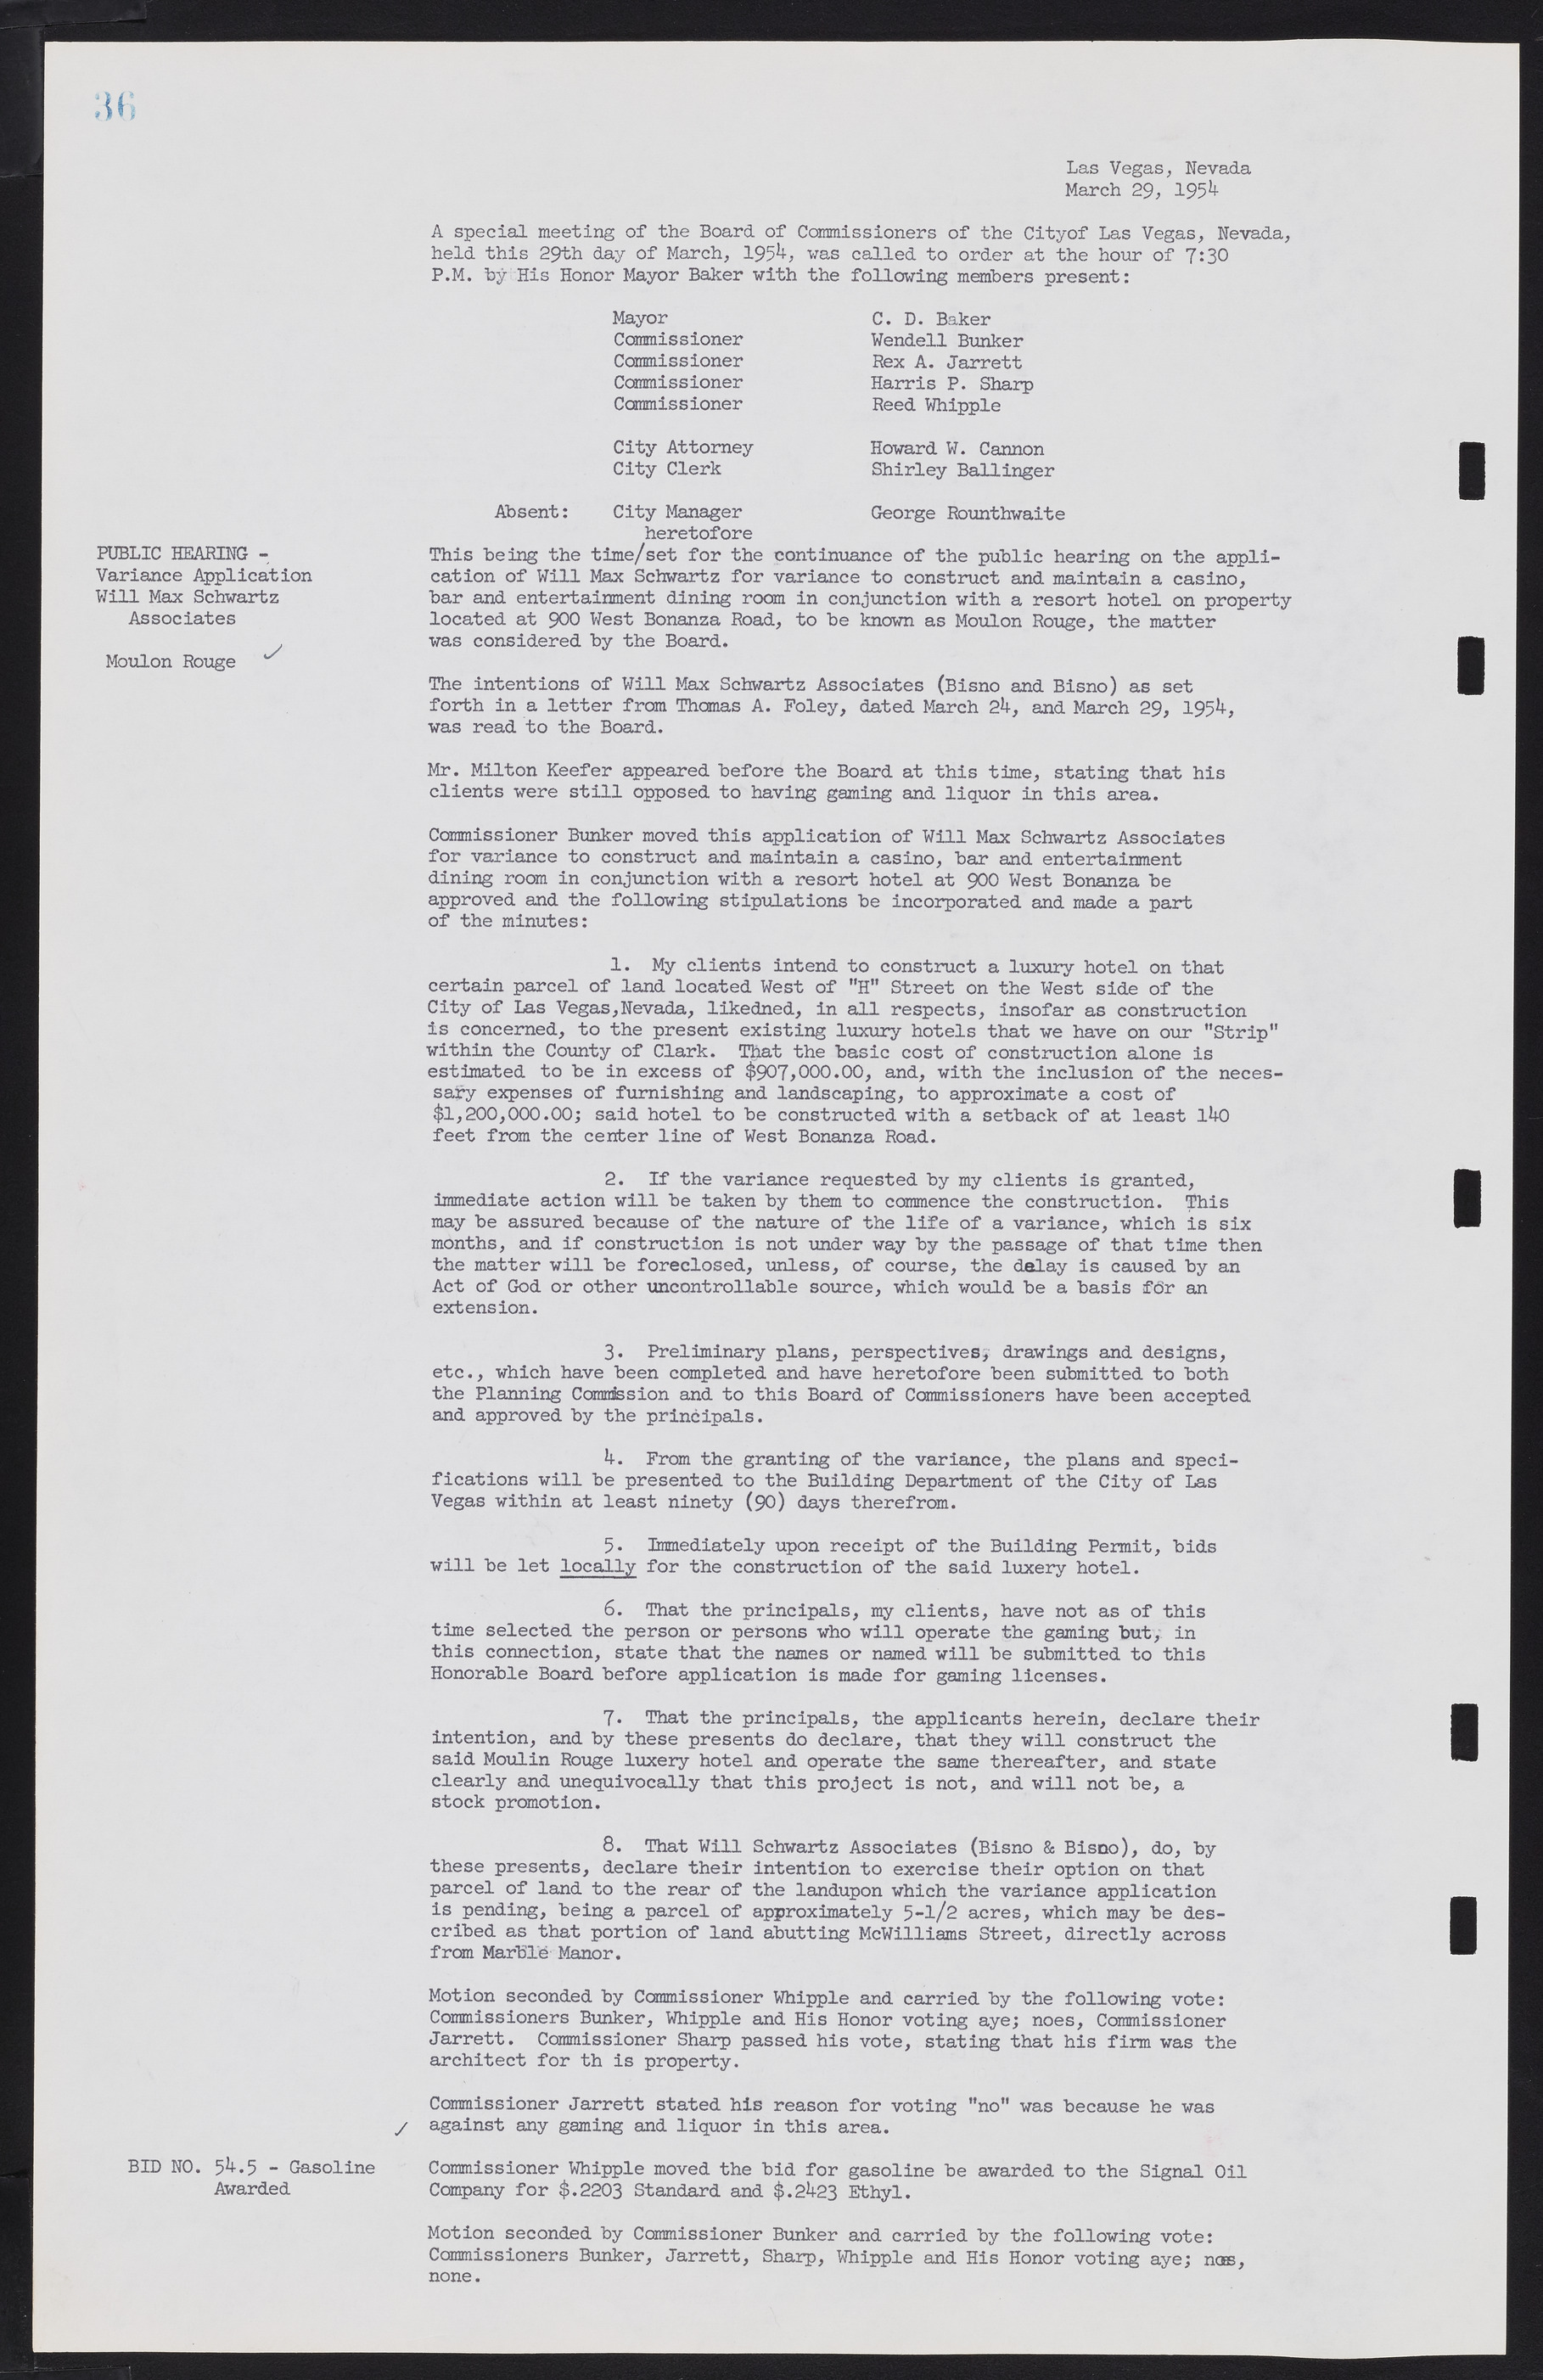 Las Vegas City Commission Minutes, February 17, 1954 to September 21, 1955, lvc000009-40